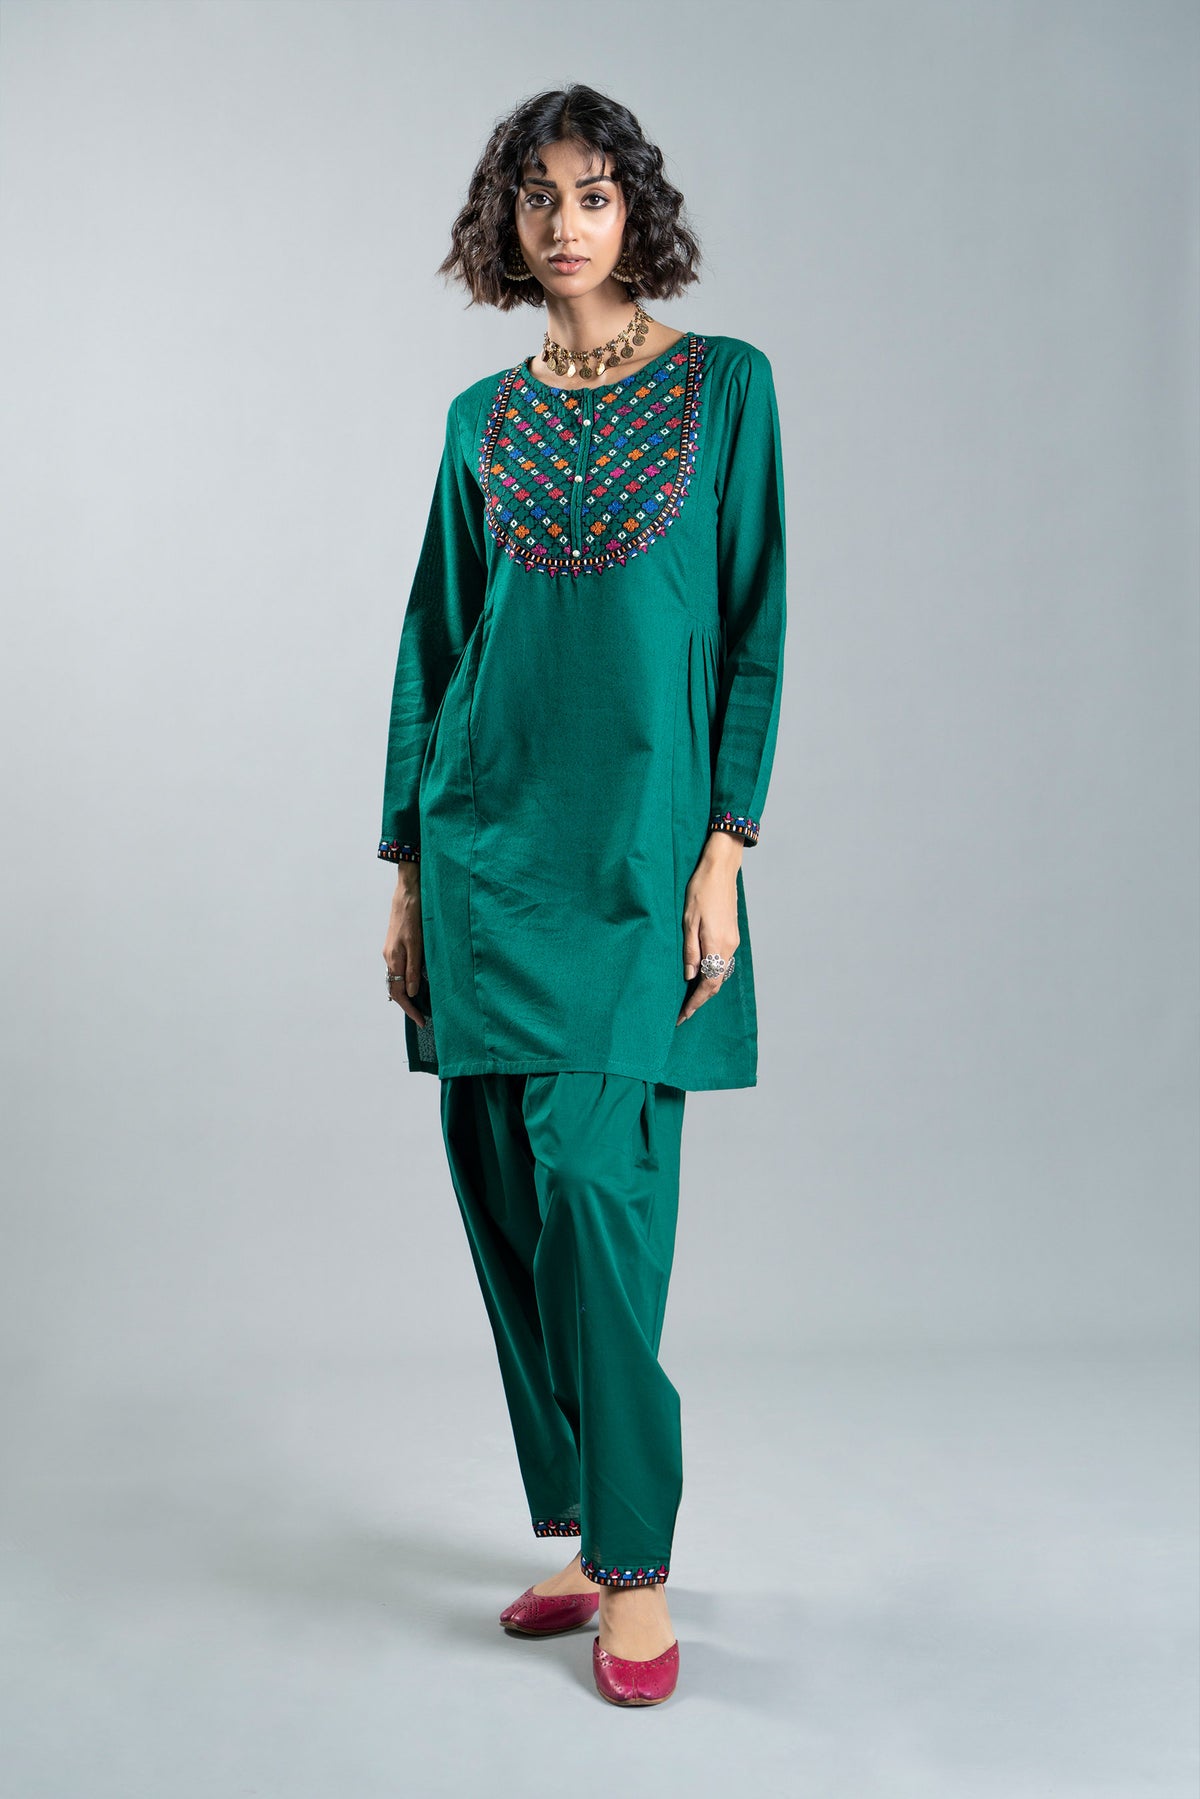 Black Grid 4 in Green coloured Lawn Karandi fabric